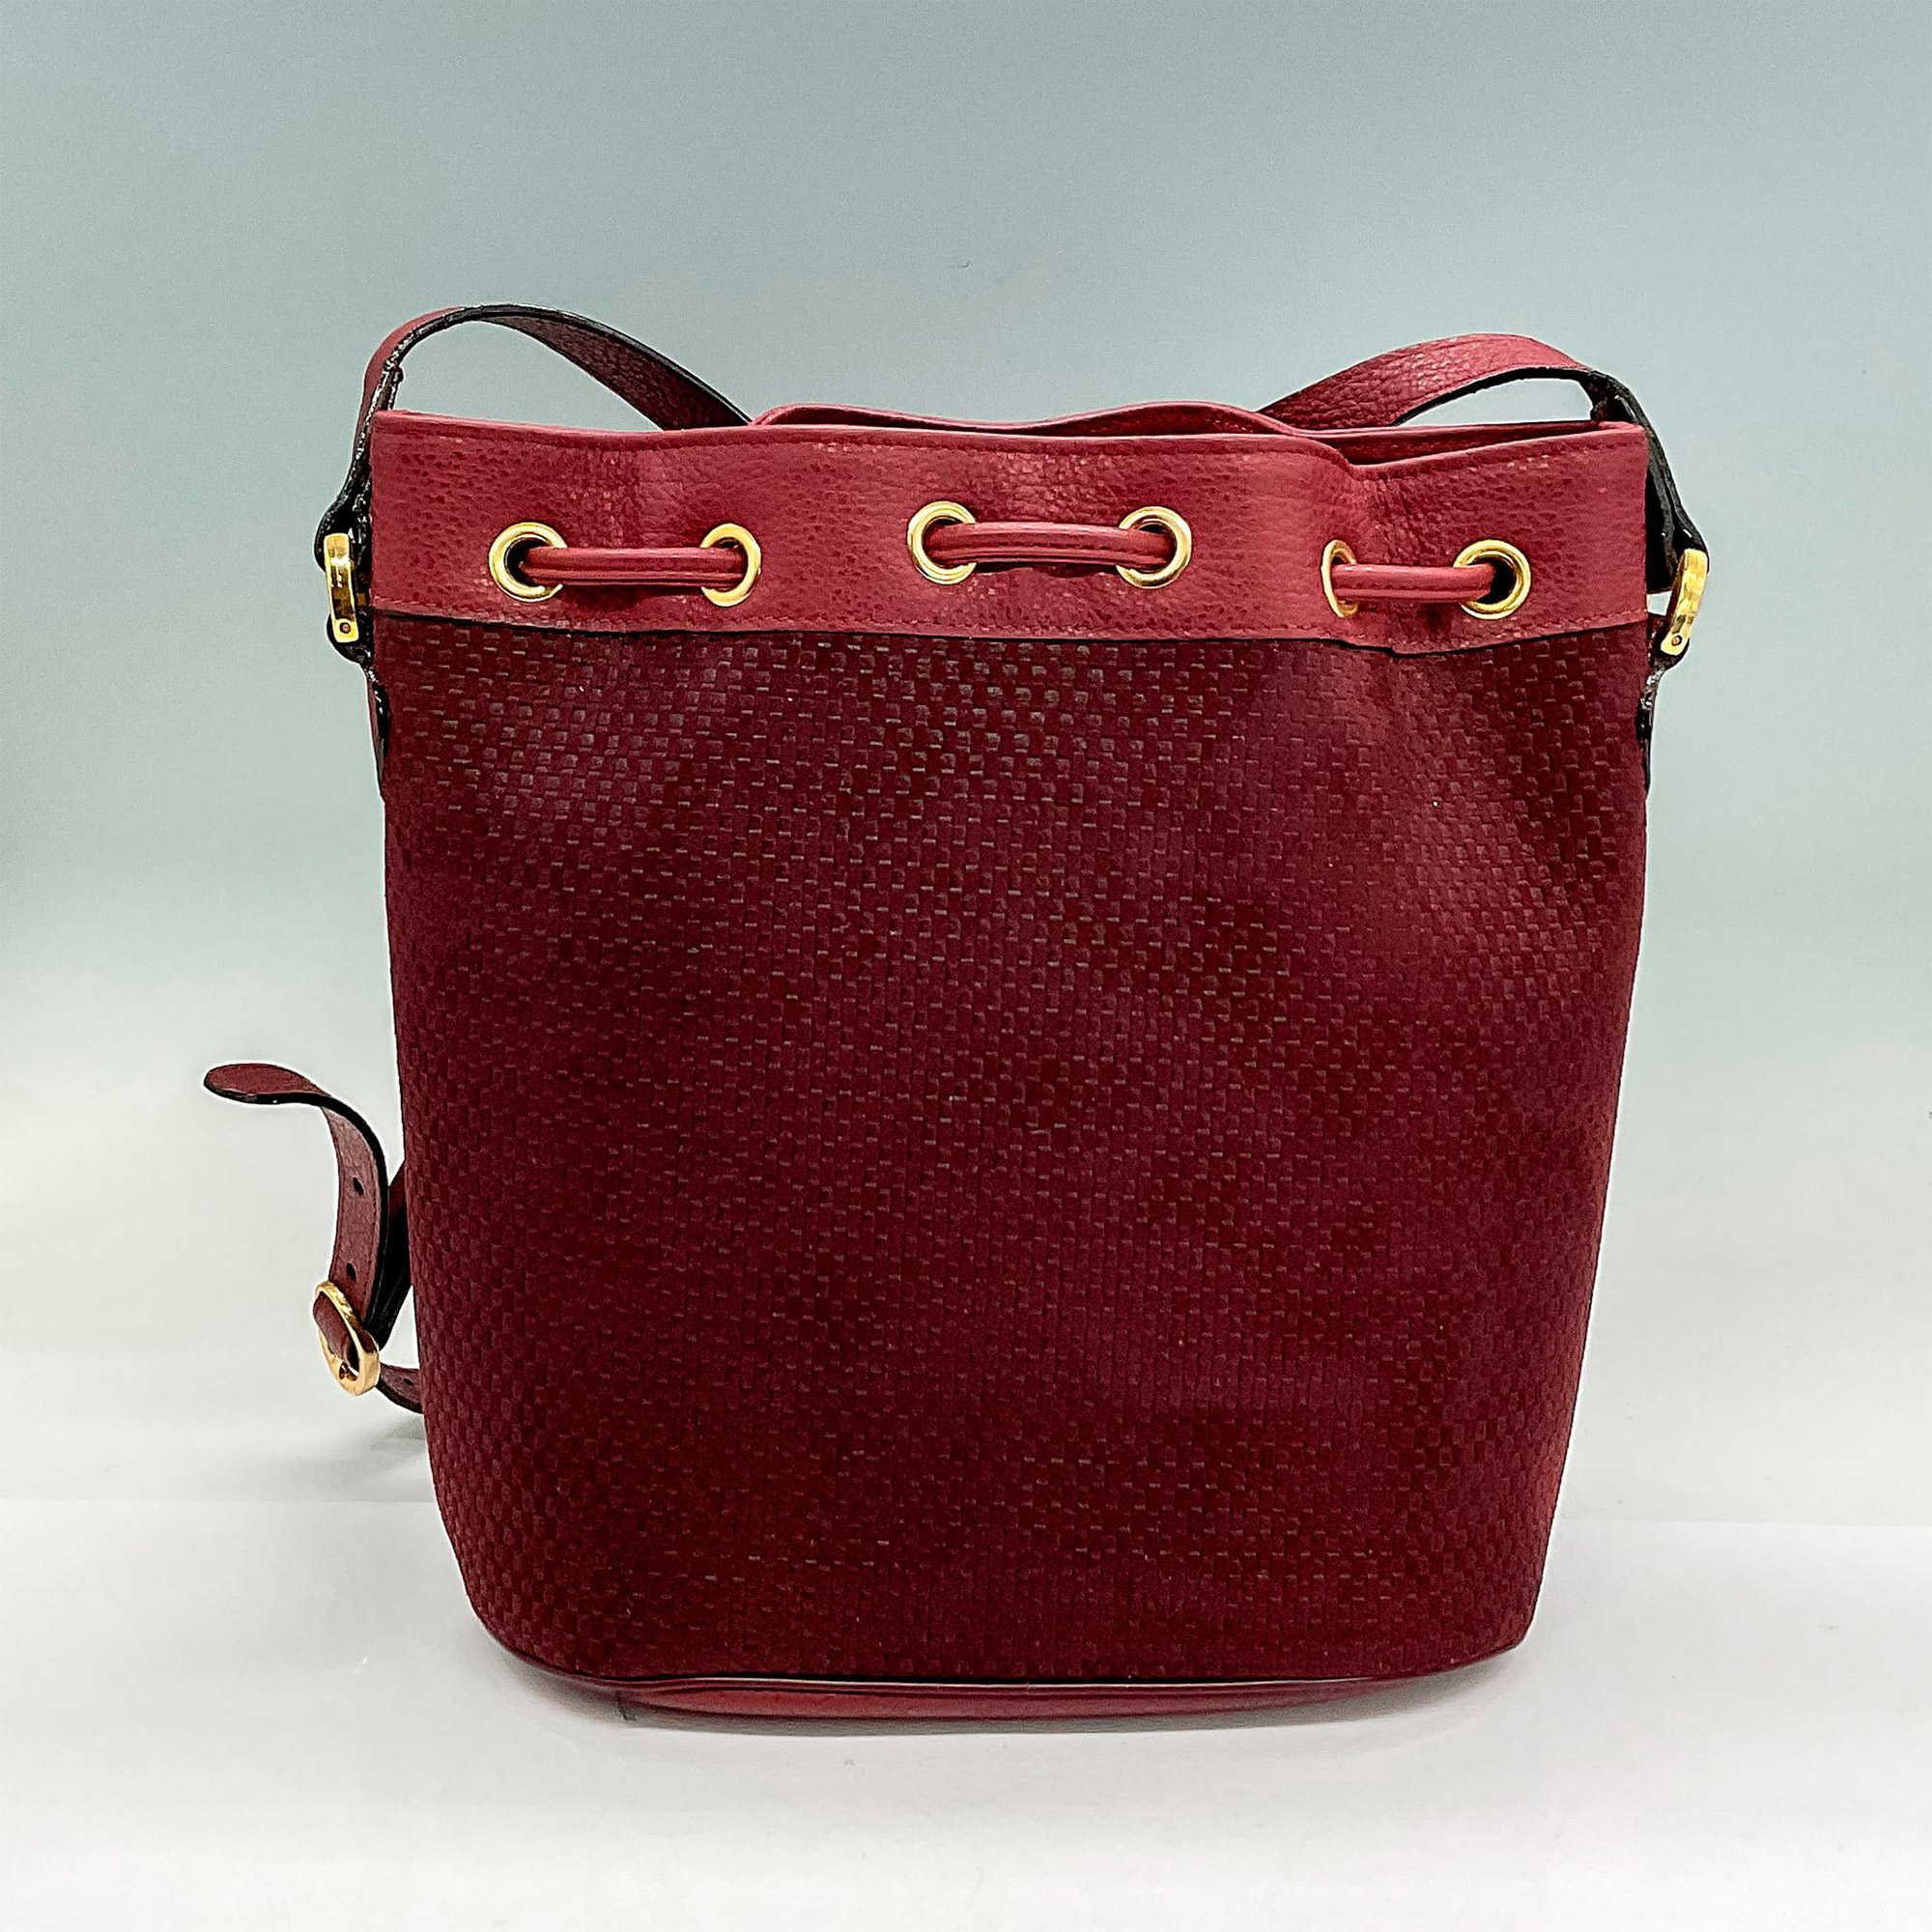 Mark Cross Burgundy Leather Handbag - Image 2 of 4